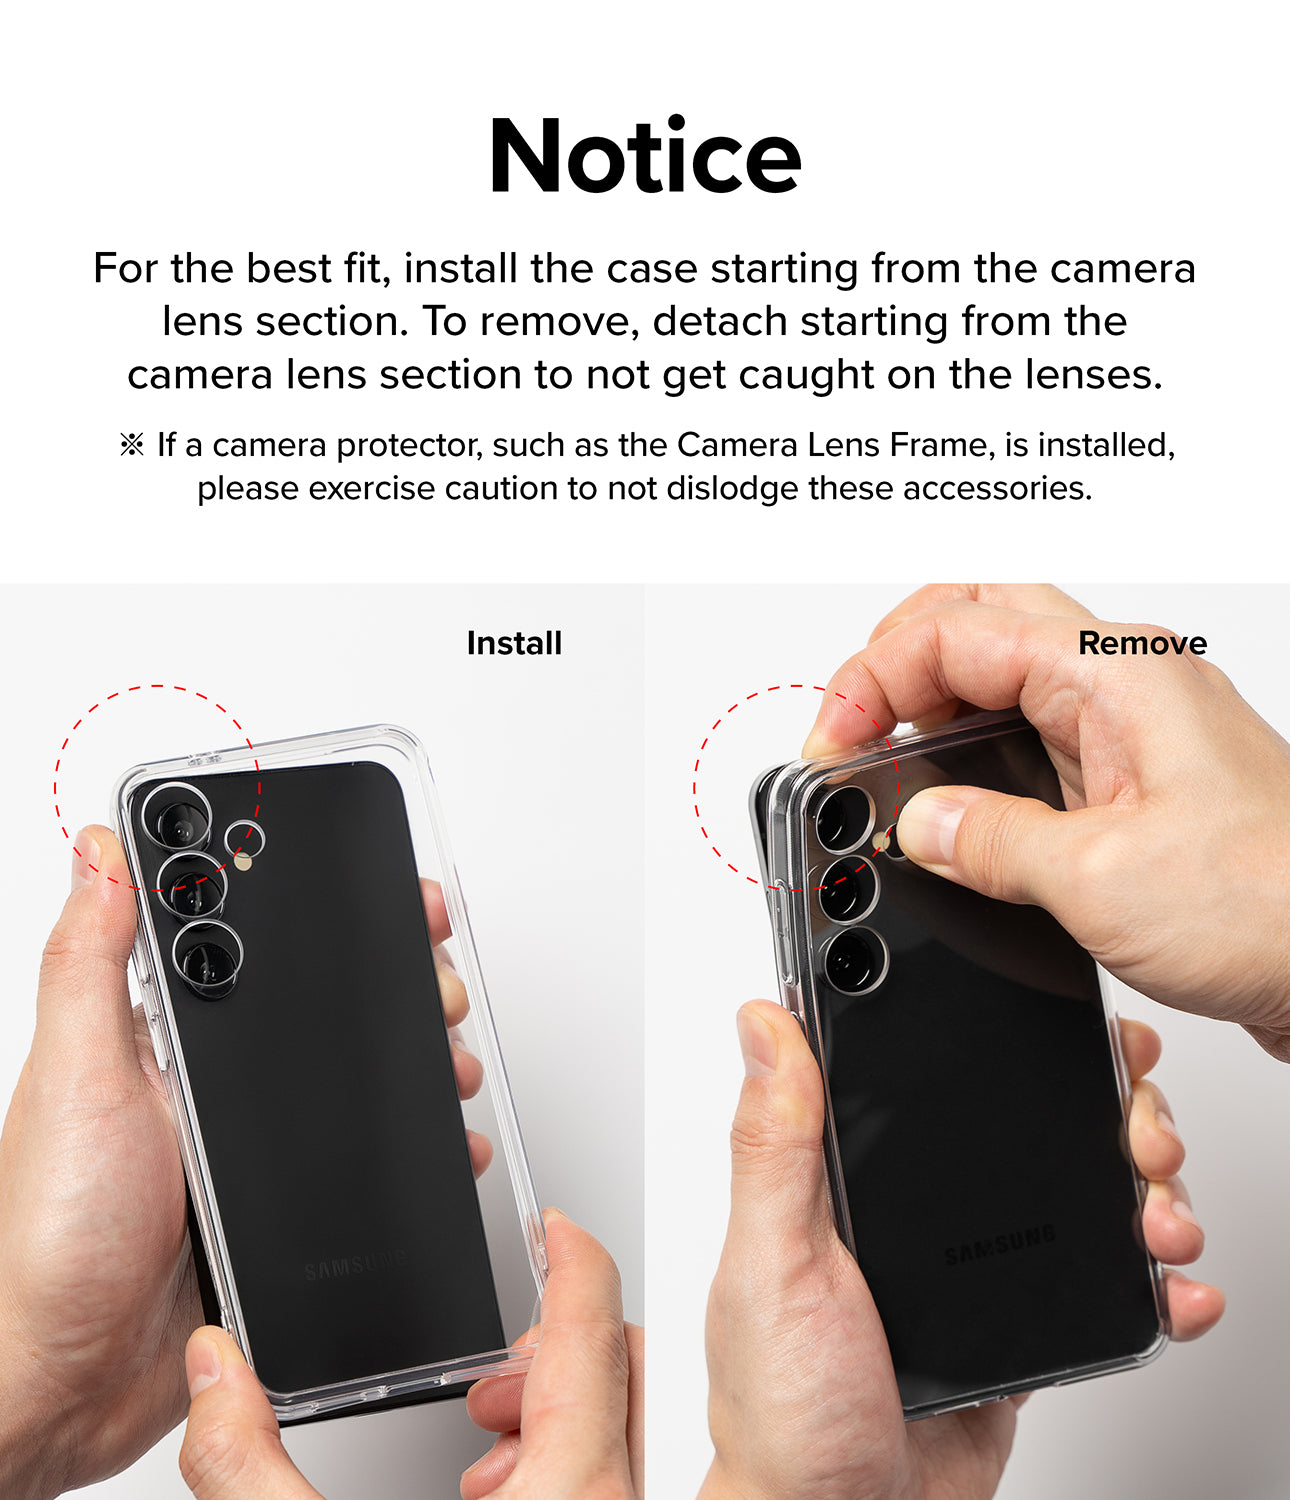 Ringke Alles Magnetic Funda Samsung Galaxy S24 Ultra negro - Comprar online